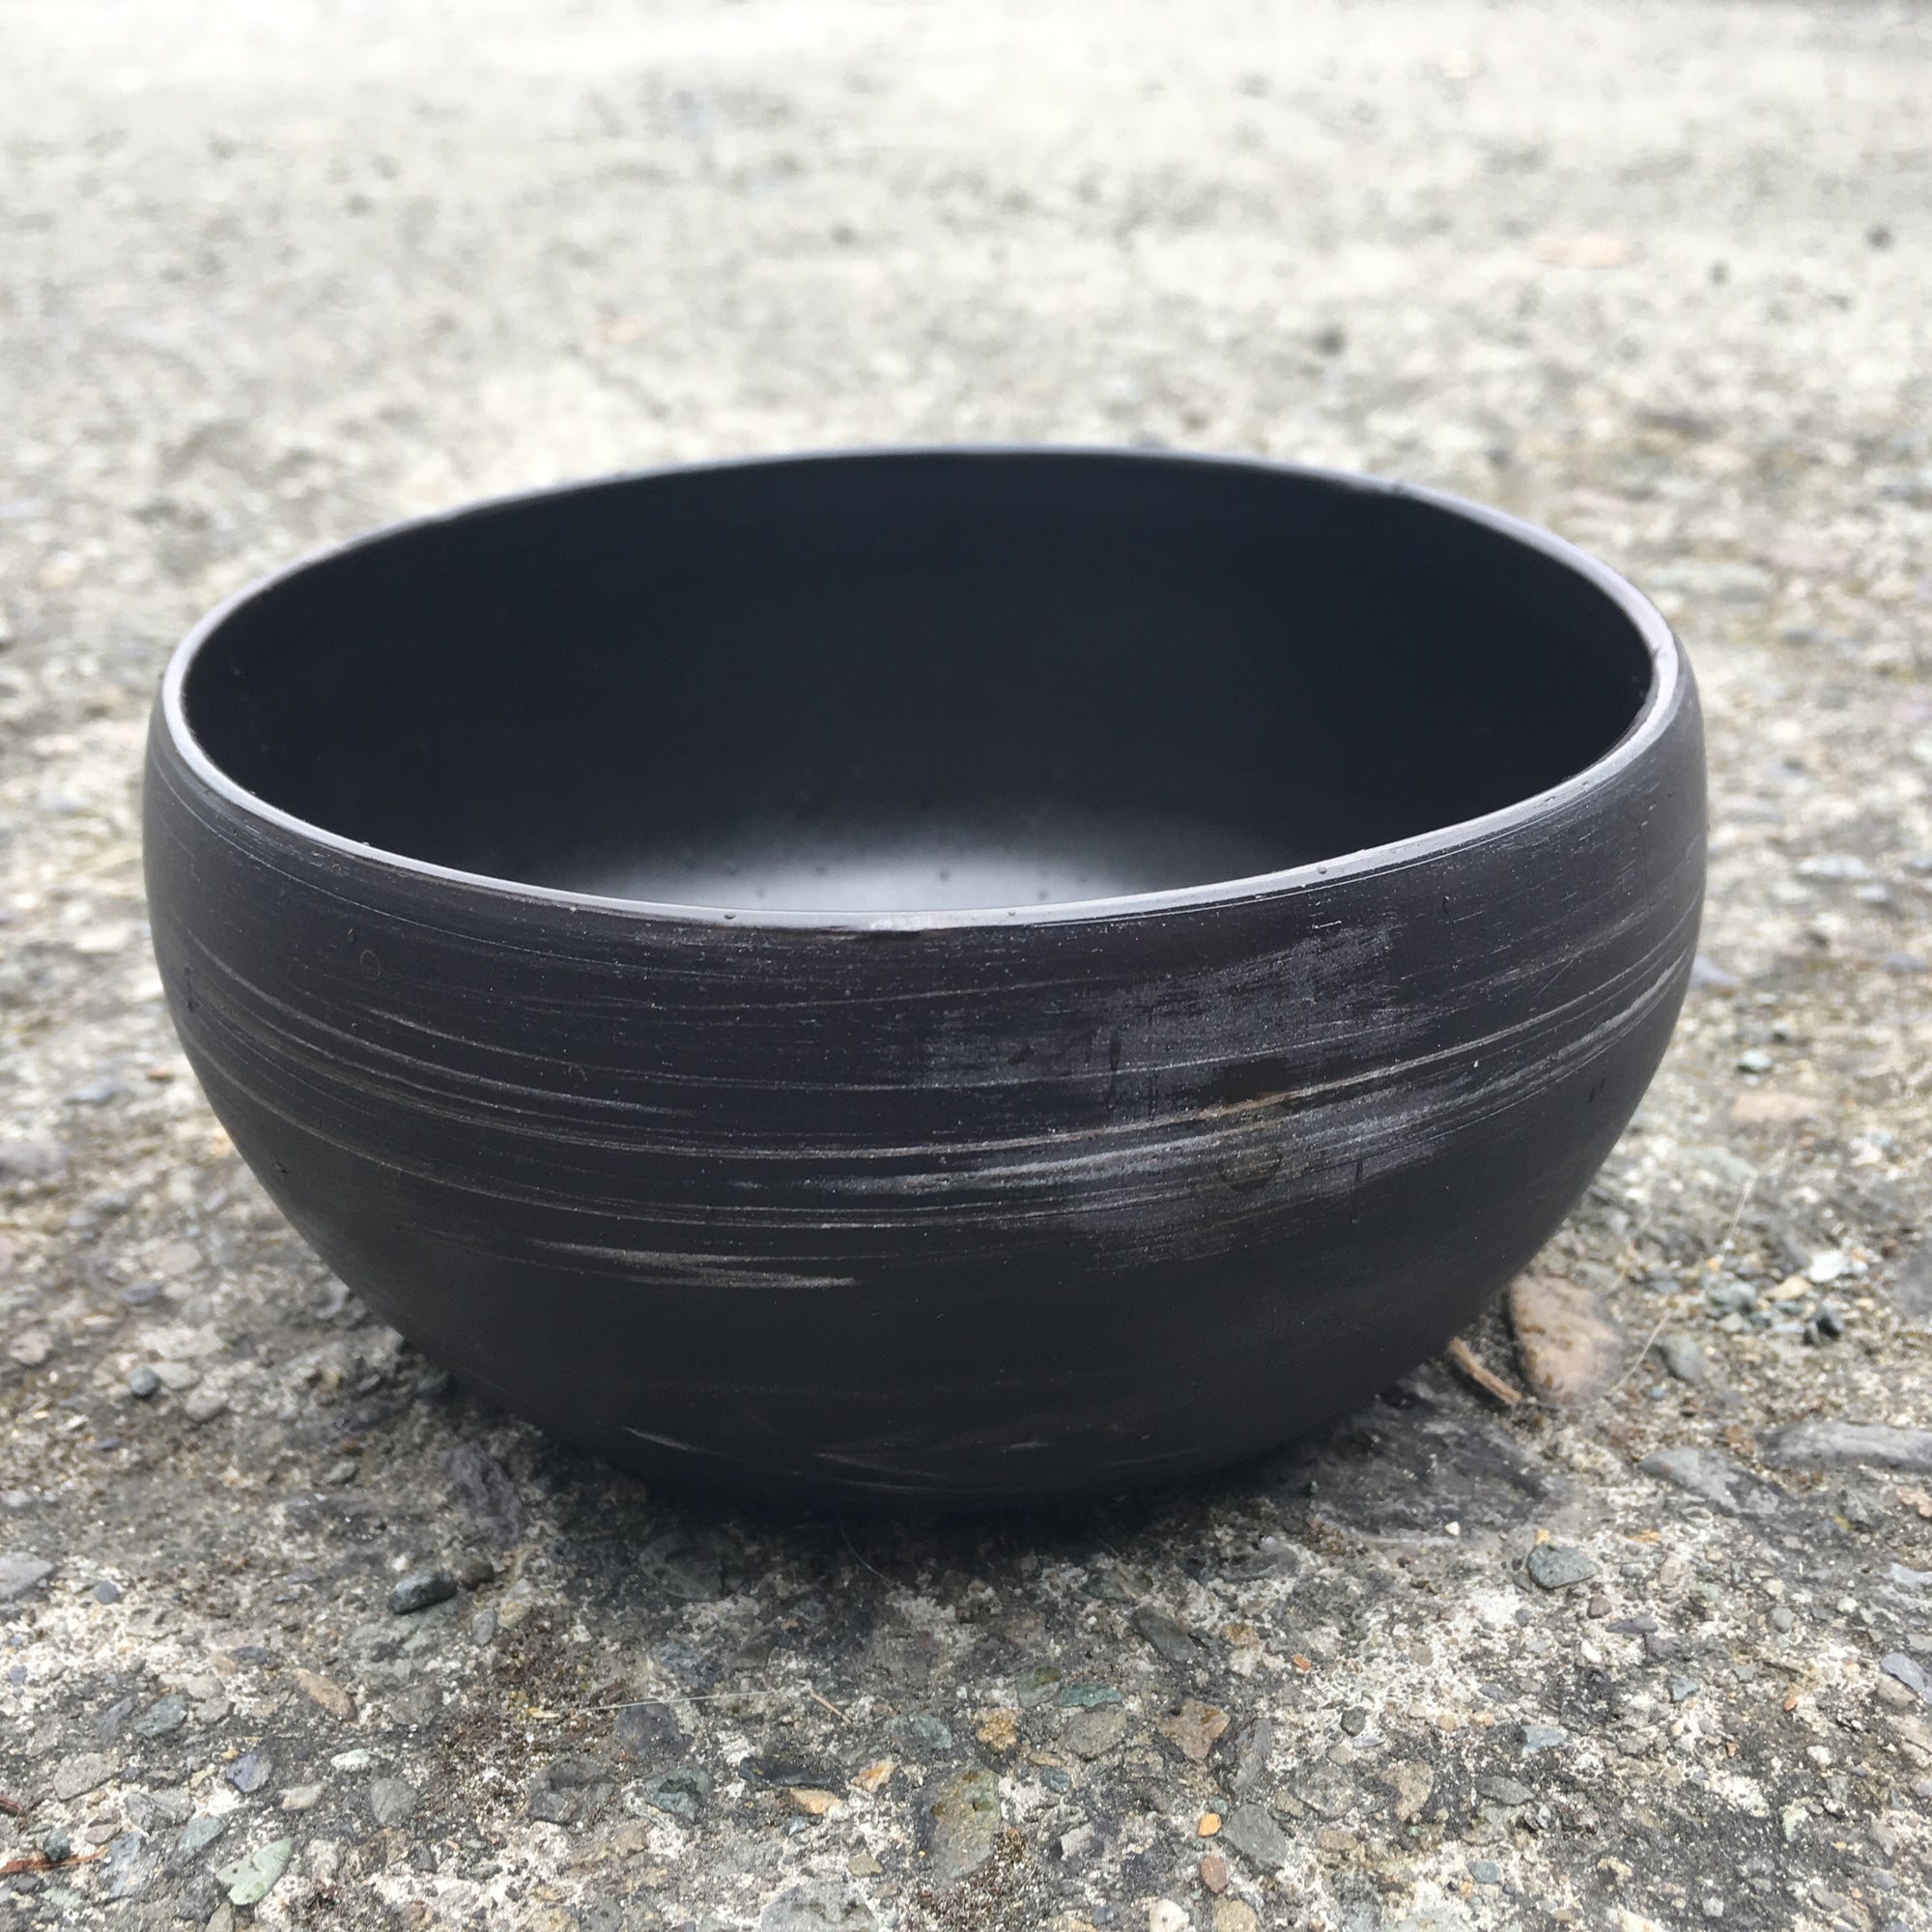 Small Ceramic bowl - Black with White